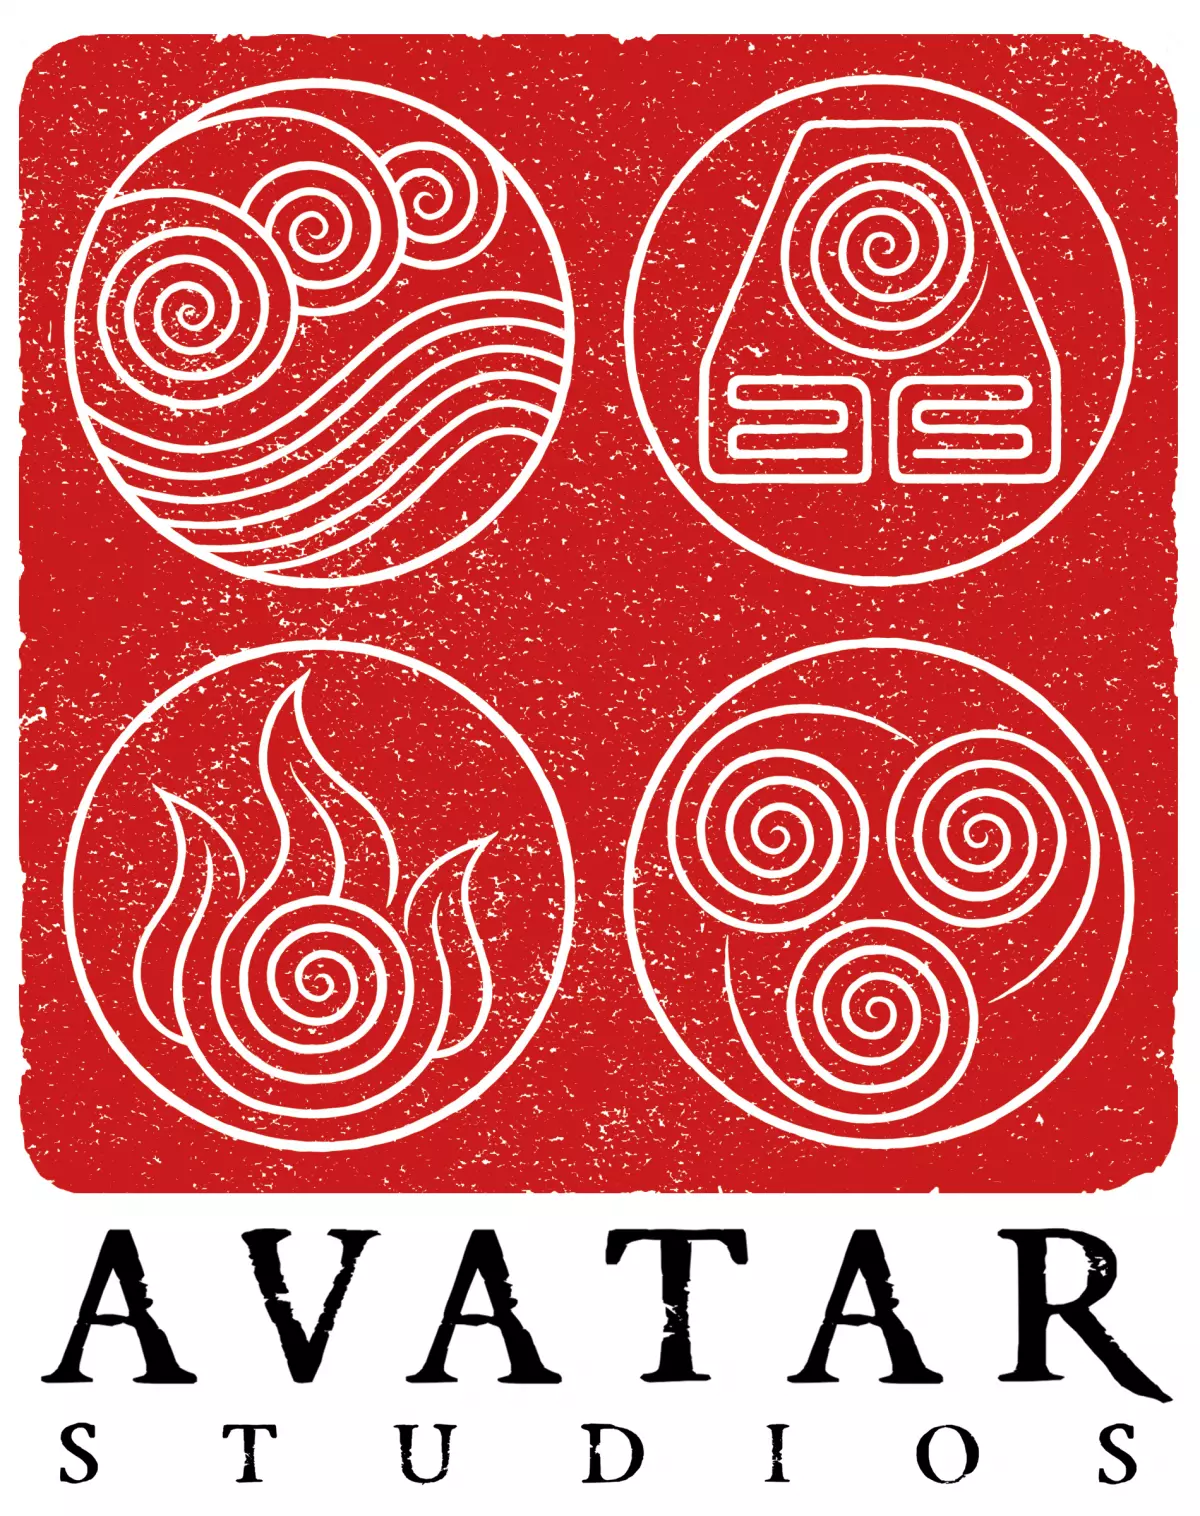 The logo of Avatar Studios